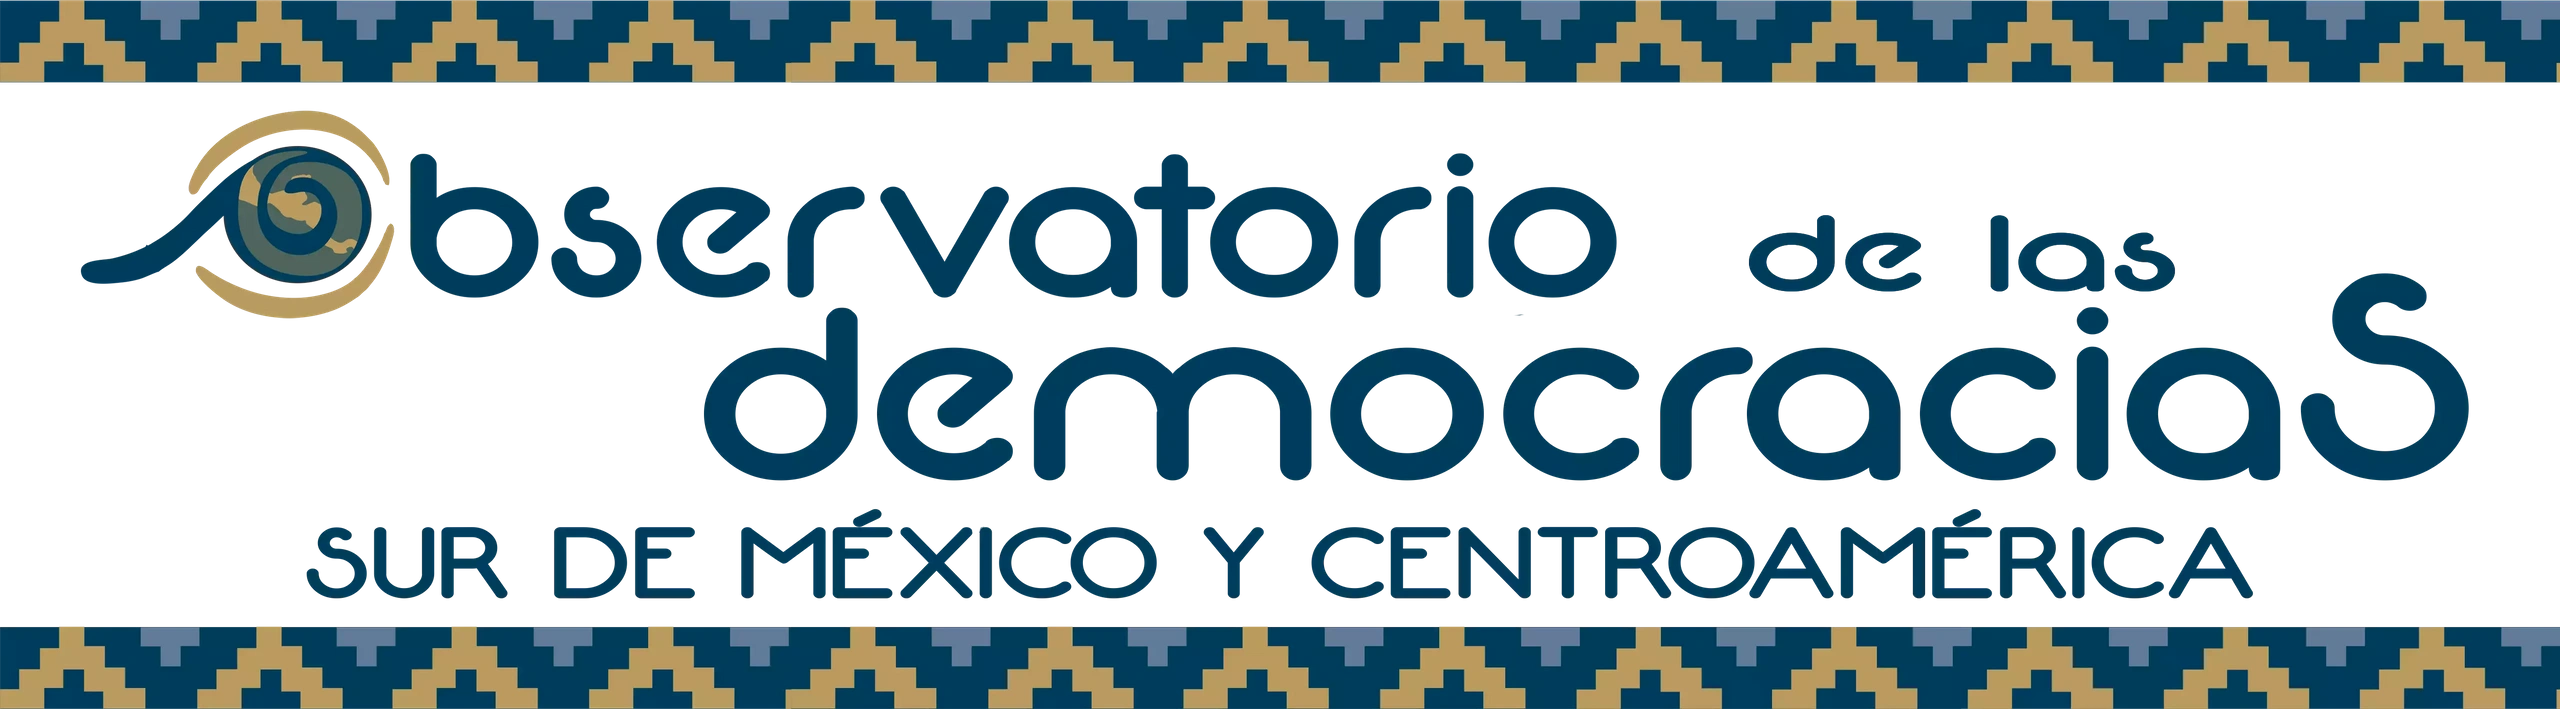 (c) Observatoriodelasdemocracias.com.mx